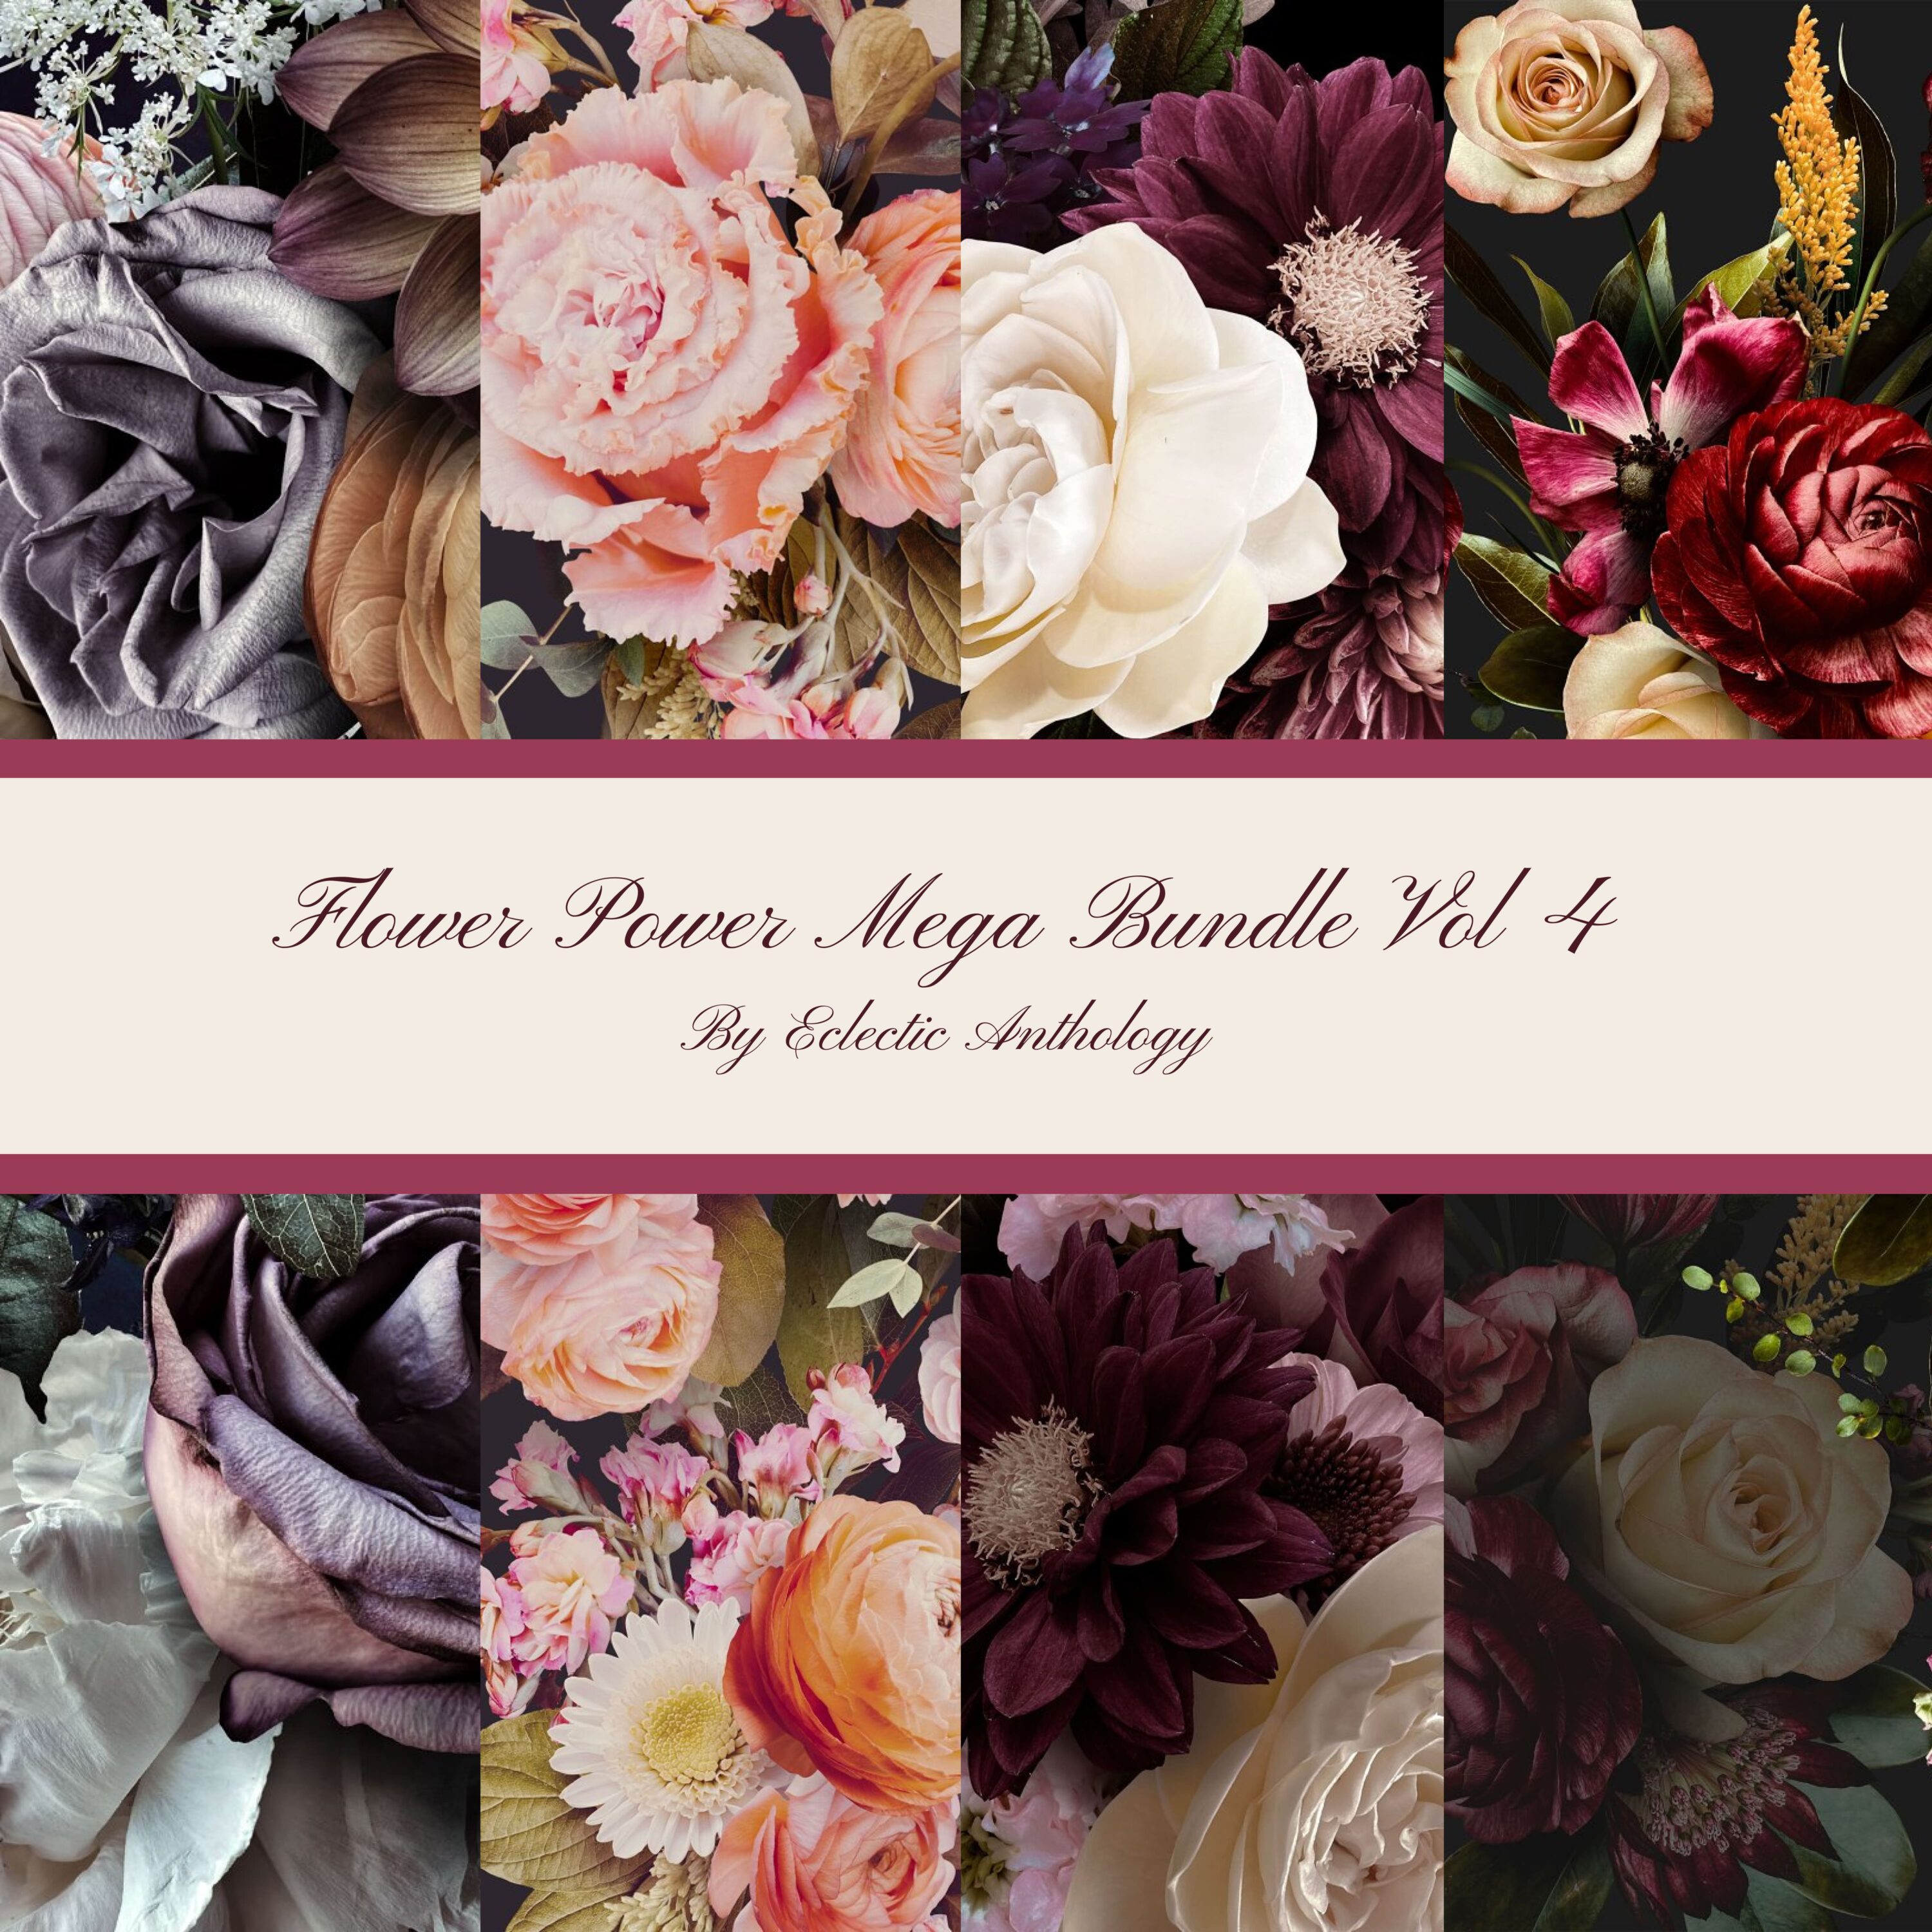 Flower Power Mega Bundle Vol 4 cover image.